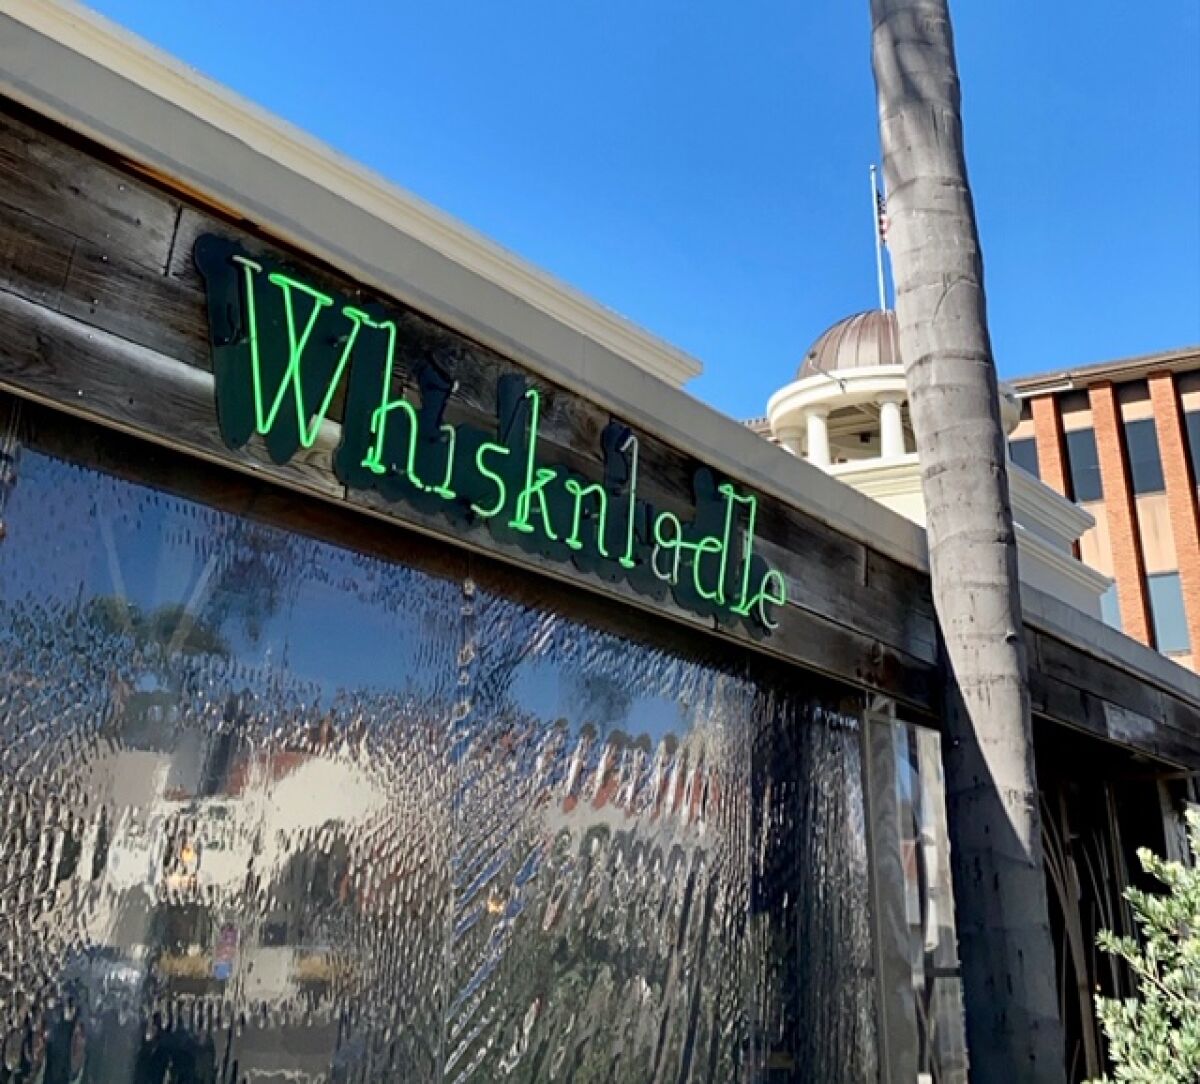 Whisknladle restaurant in La Jolla